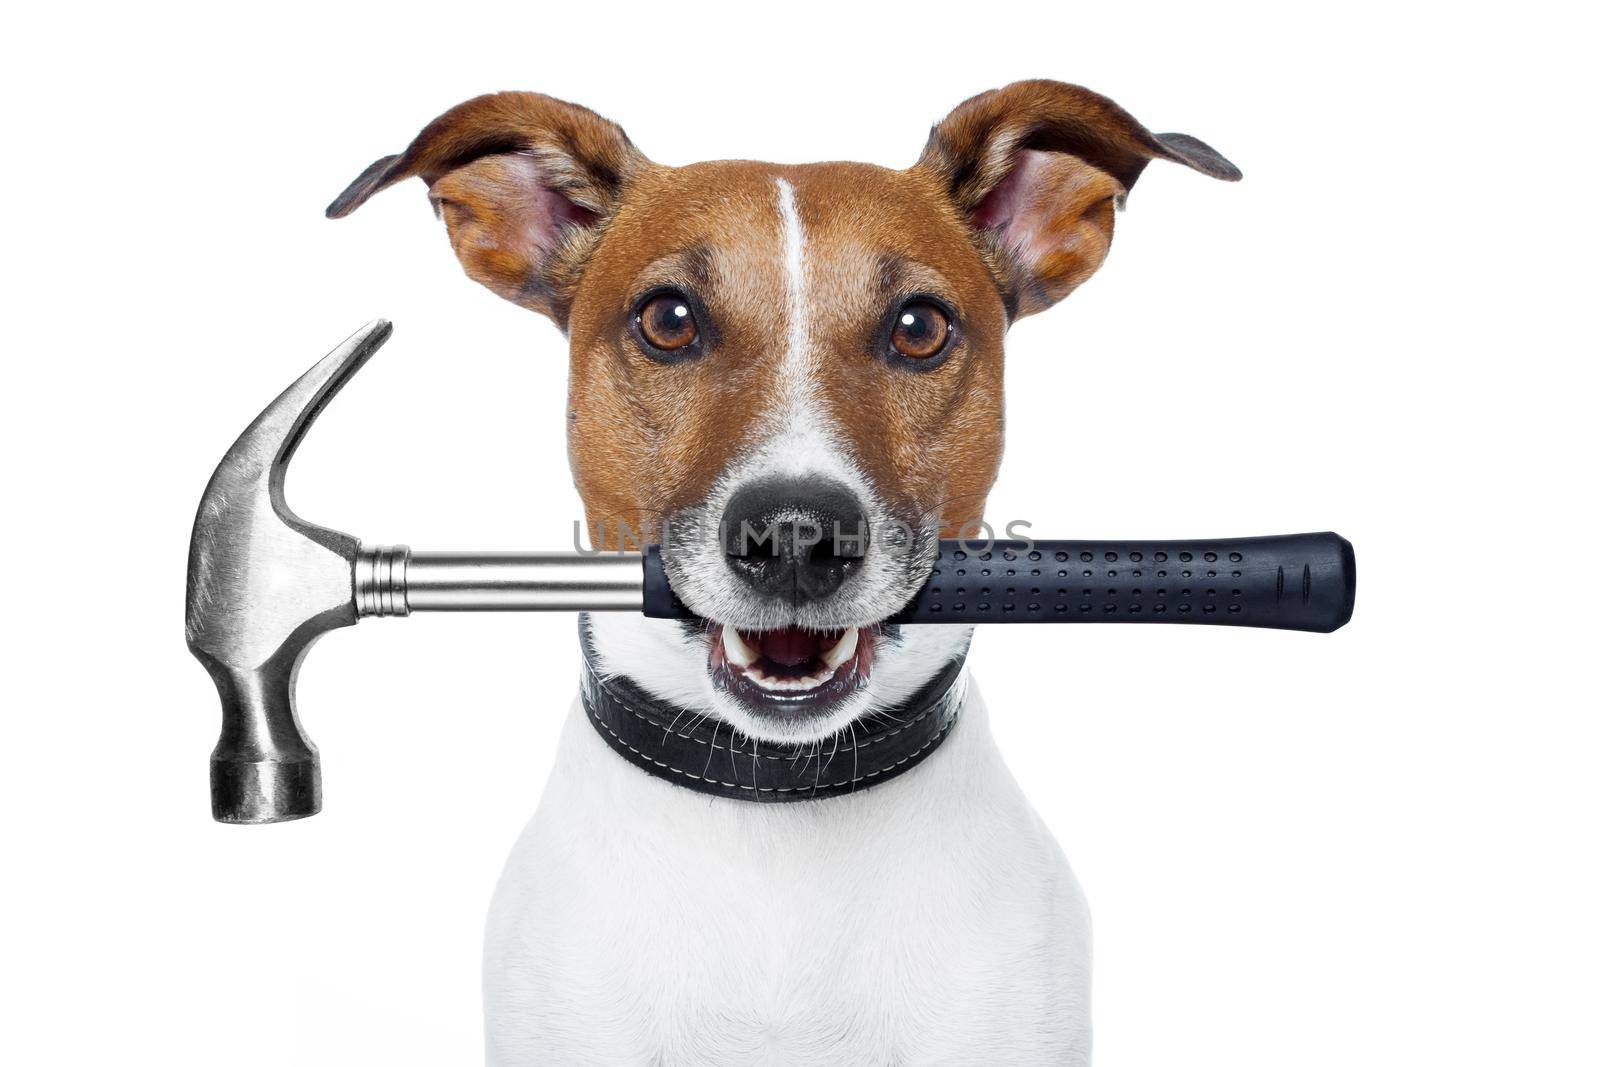 handyman dog with a hammer by Brosch